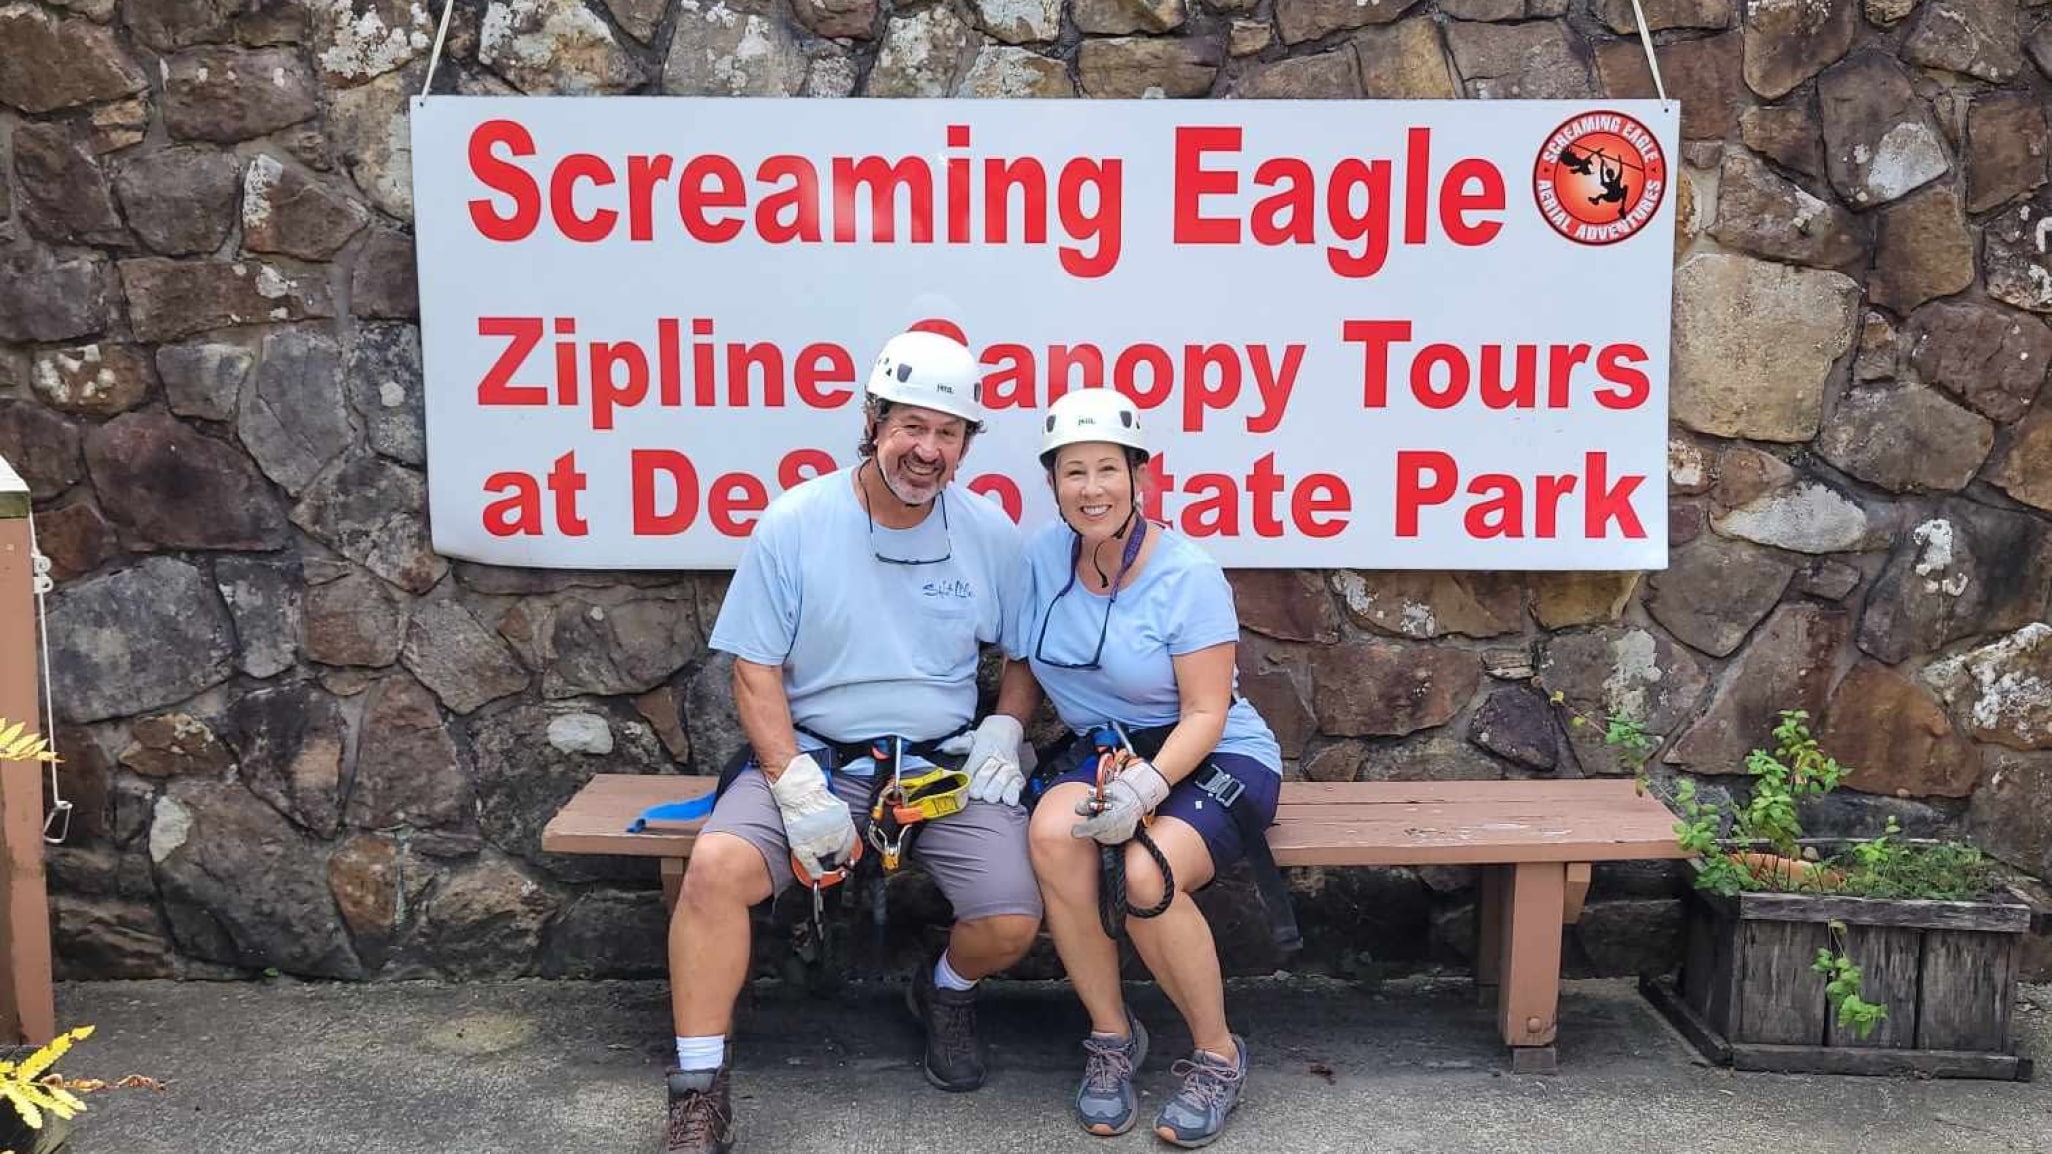 Couple ziplining DeSoto Falls State Park